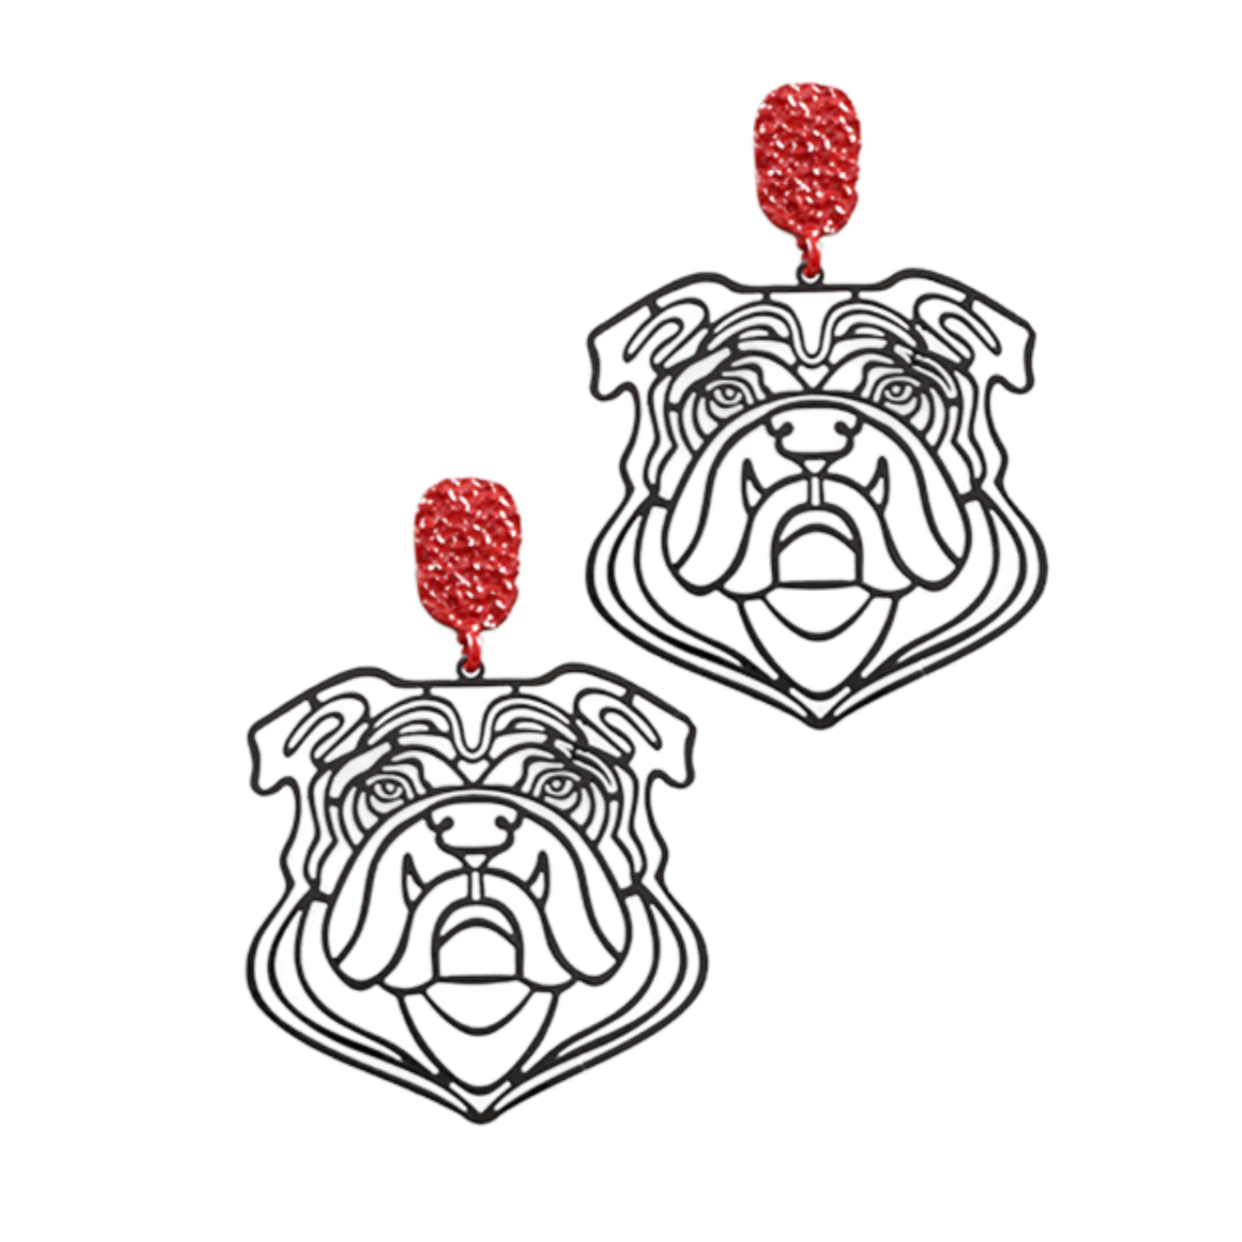 UGA Bulldog Filigree Earrings